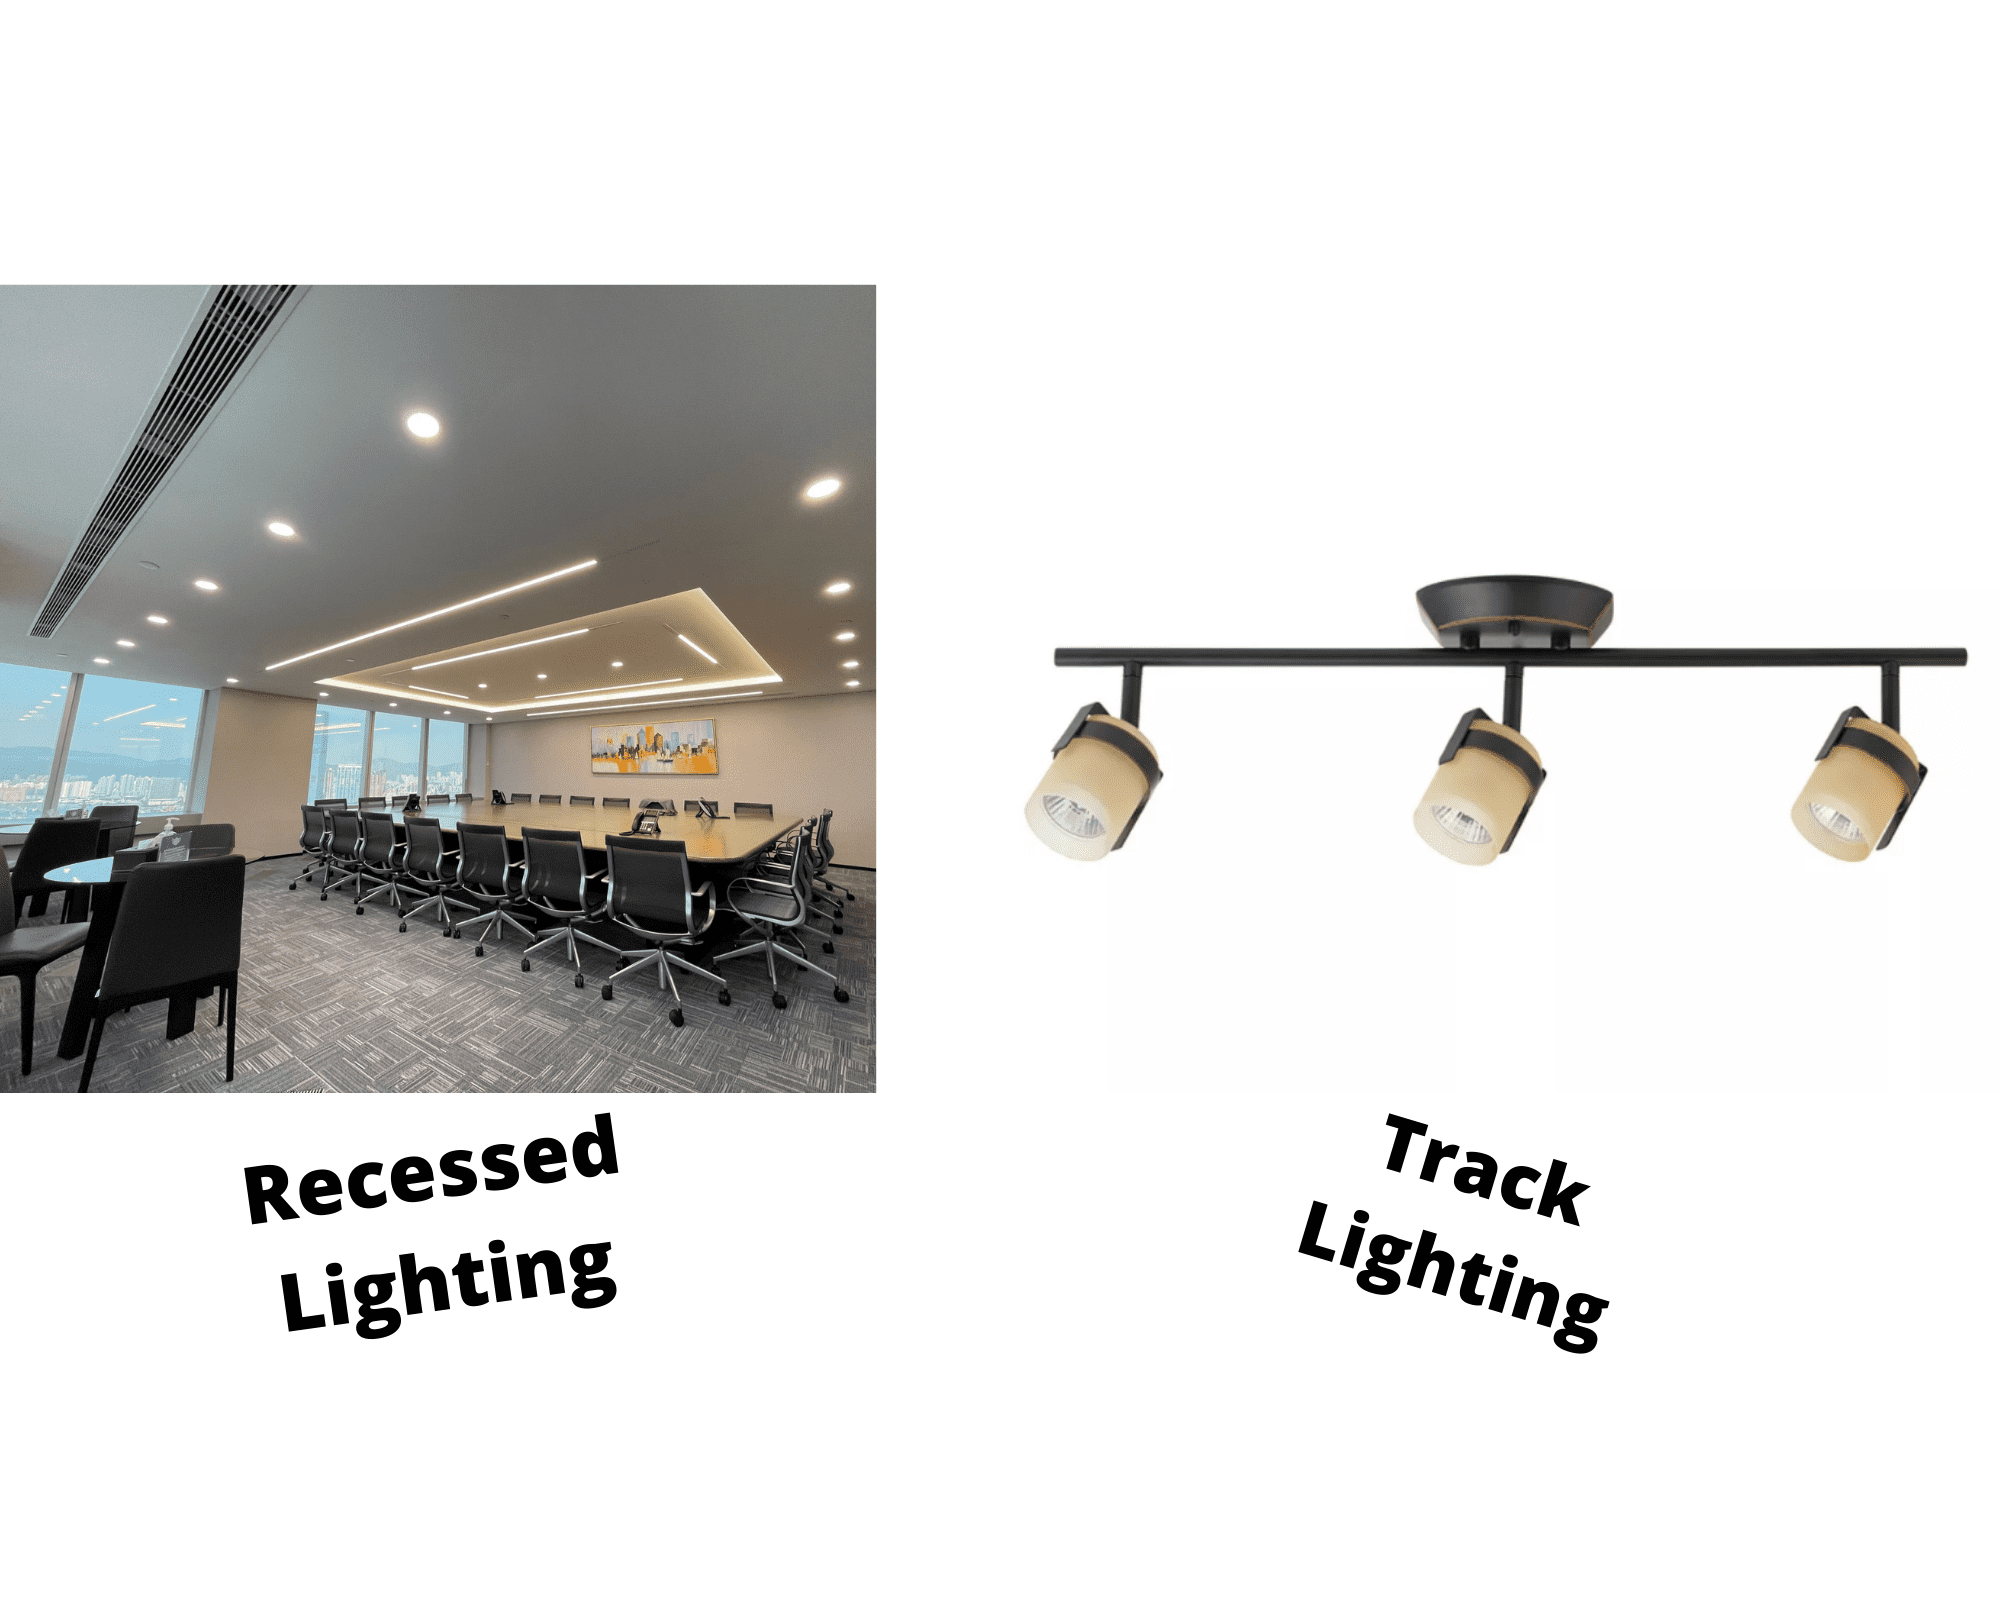 recessed light vs track light